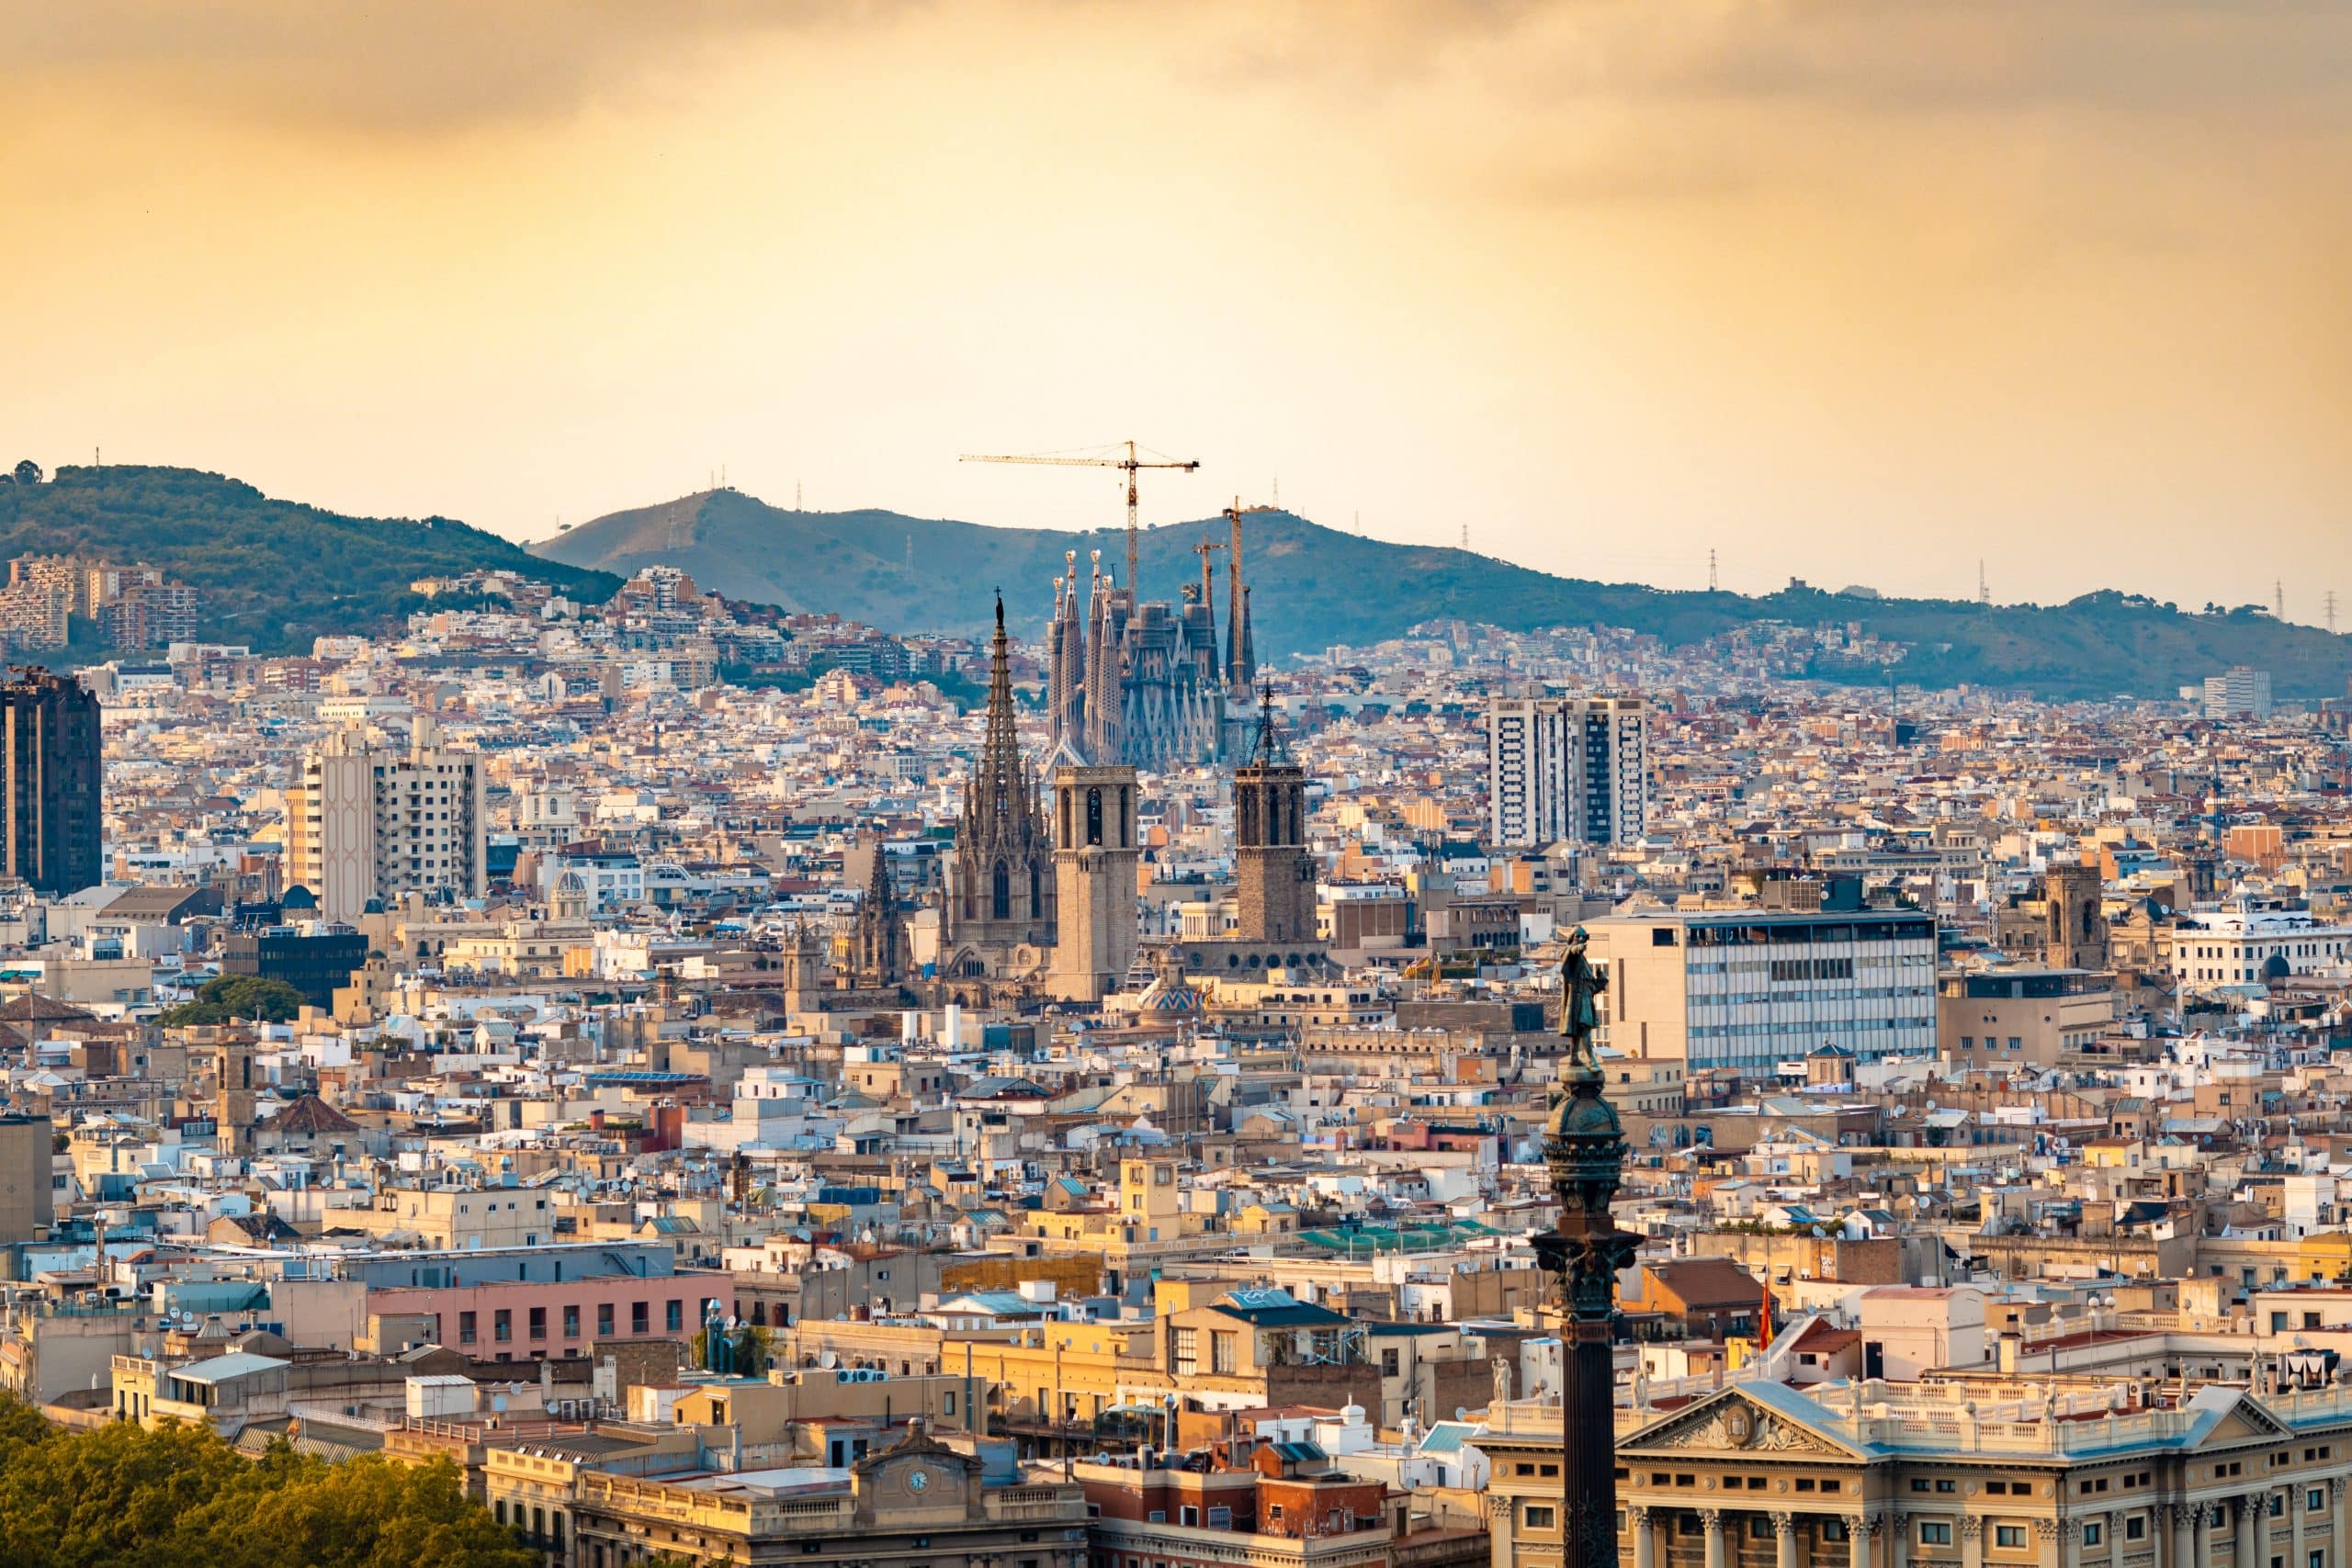 Barcelona: A Case for Smart Energy Management